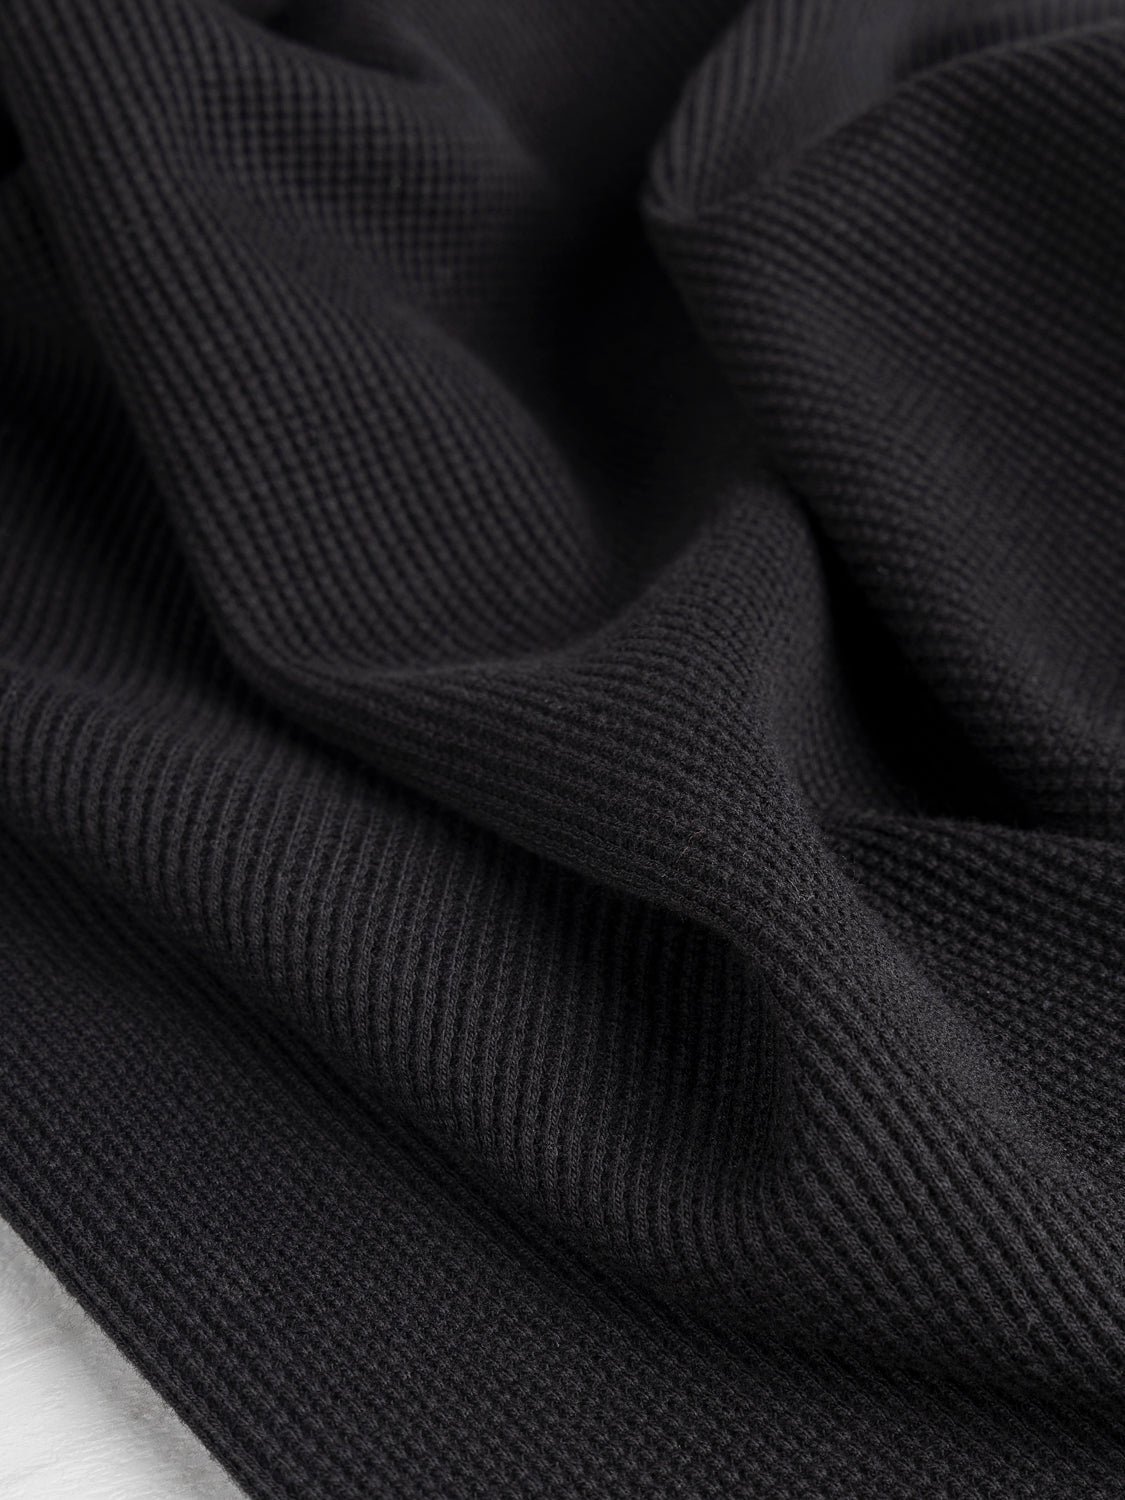 Black woven jacquard stripe stretch lining - $14.50/yd